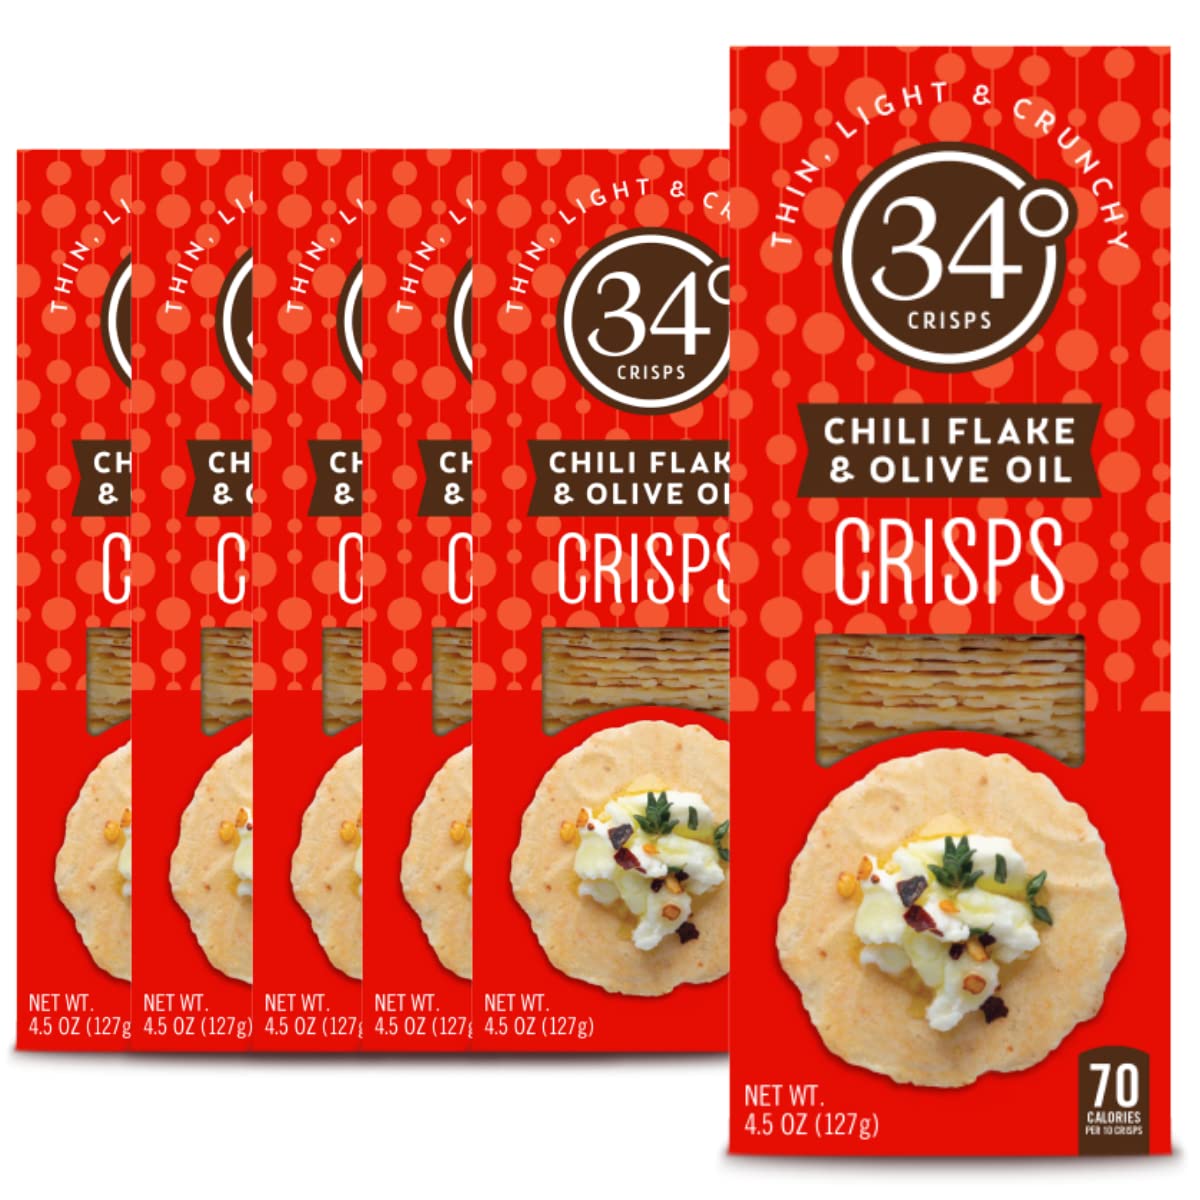 34 Degrees Crisps | Chili Flake & Olive Oil Crisps | Thin, Light & Crunchy Original Crisps, 6 Pack (4.5oz each)